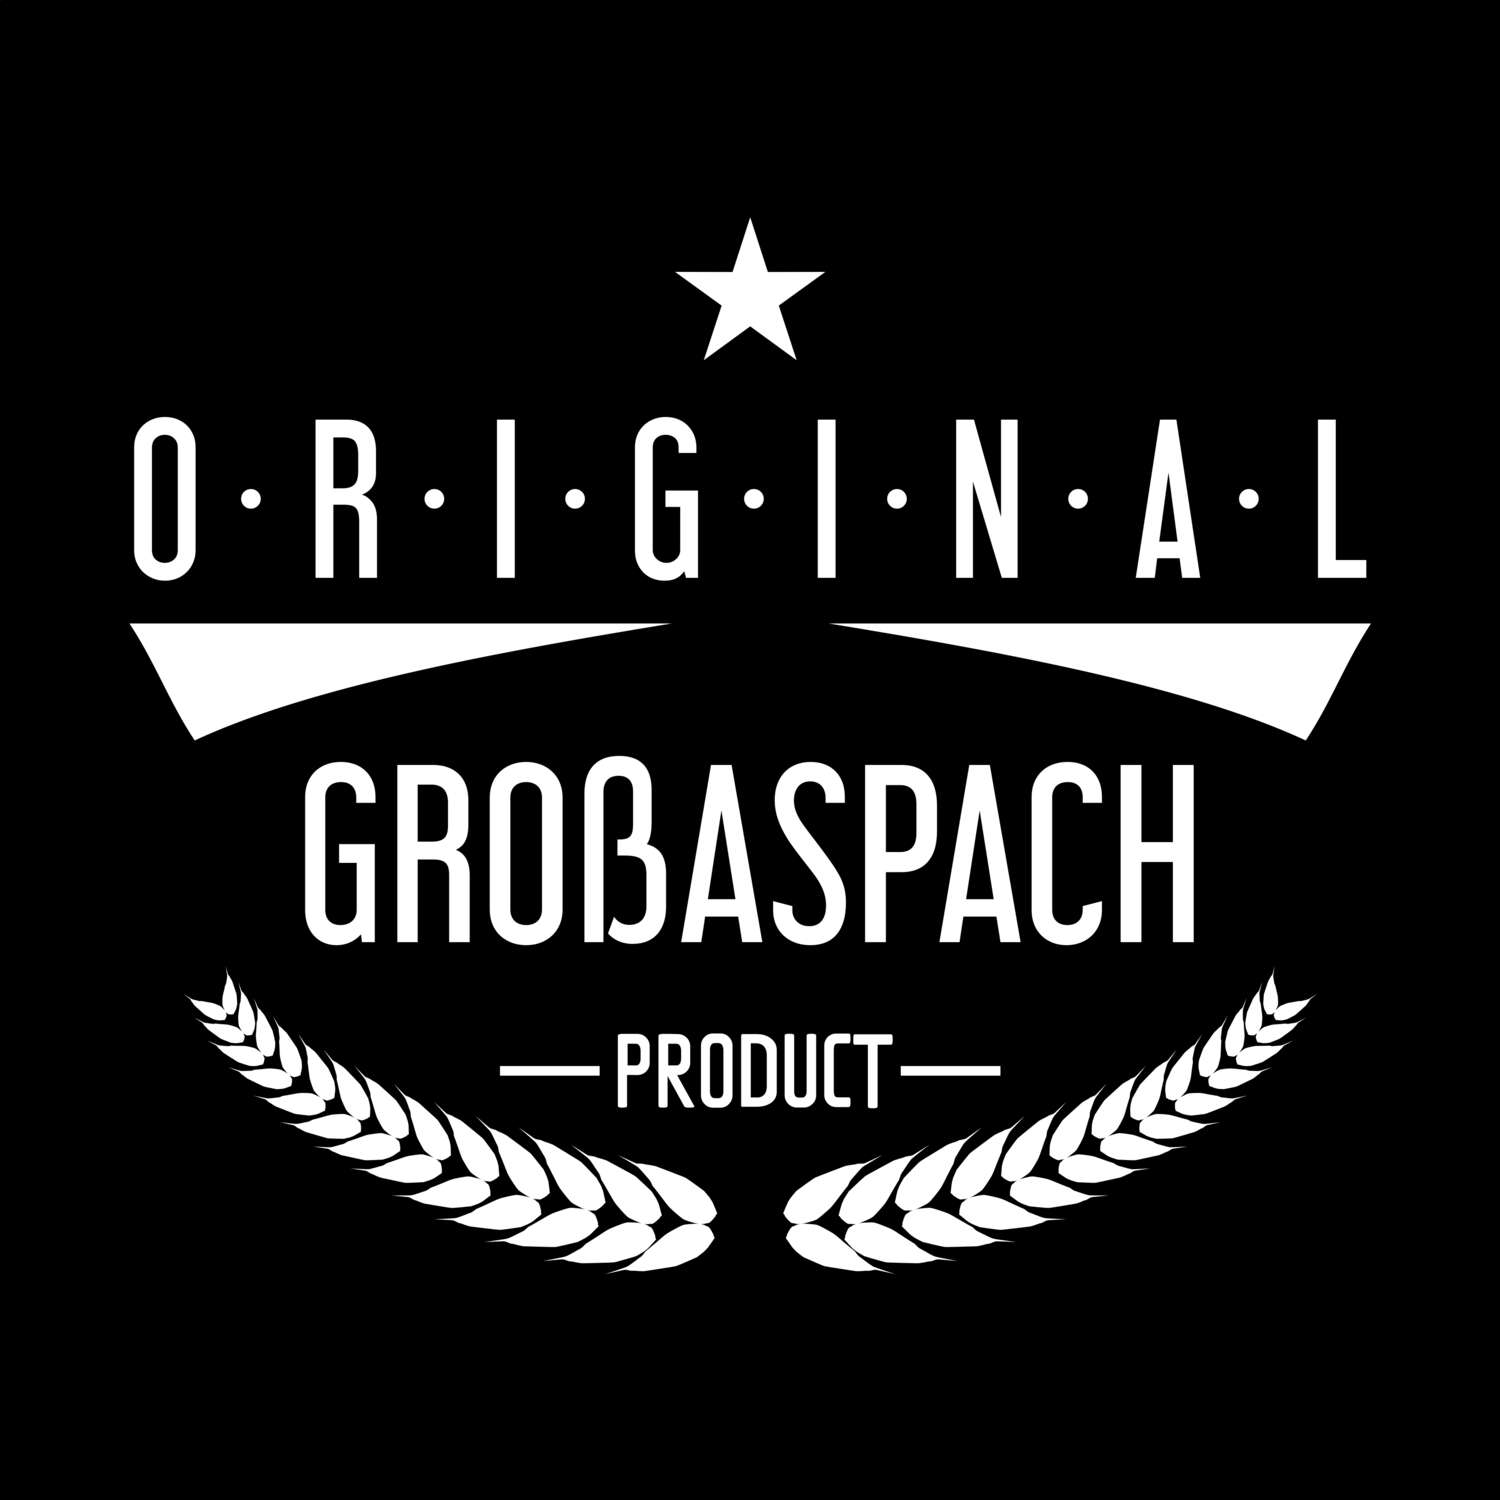 Großaspach T-Shirt »Original Product«